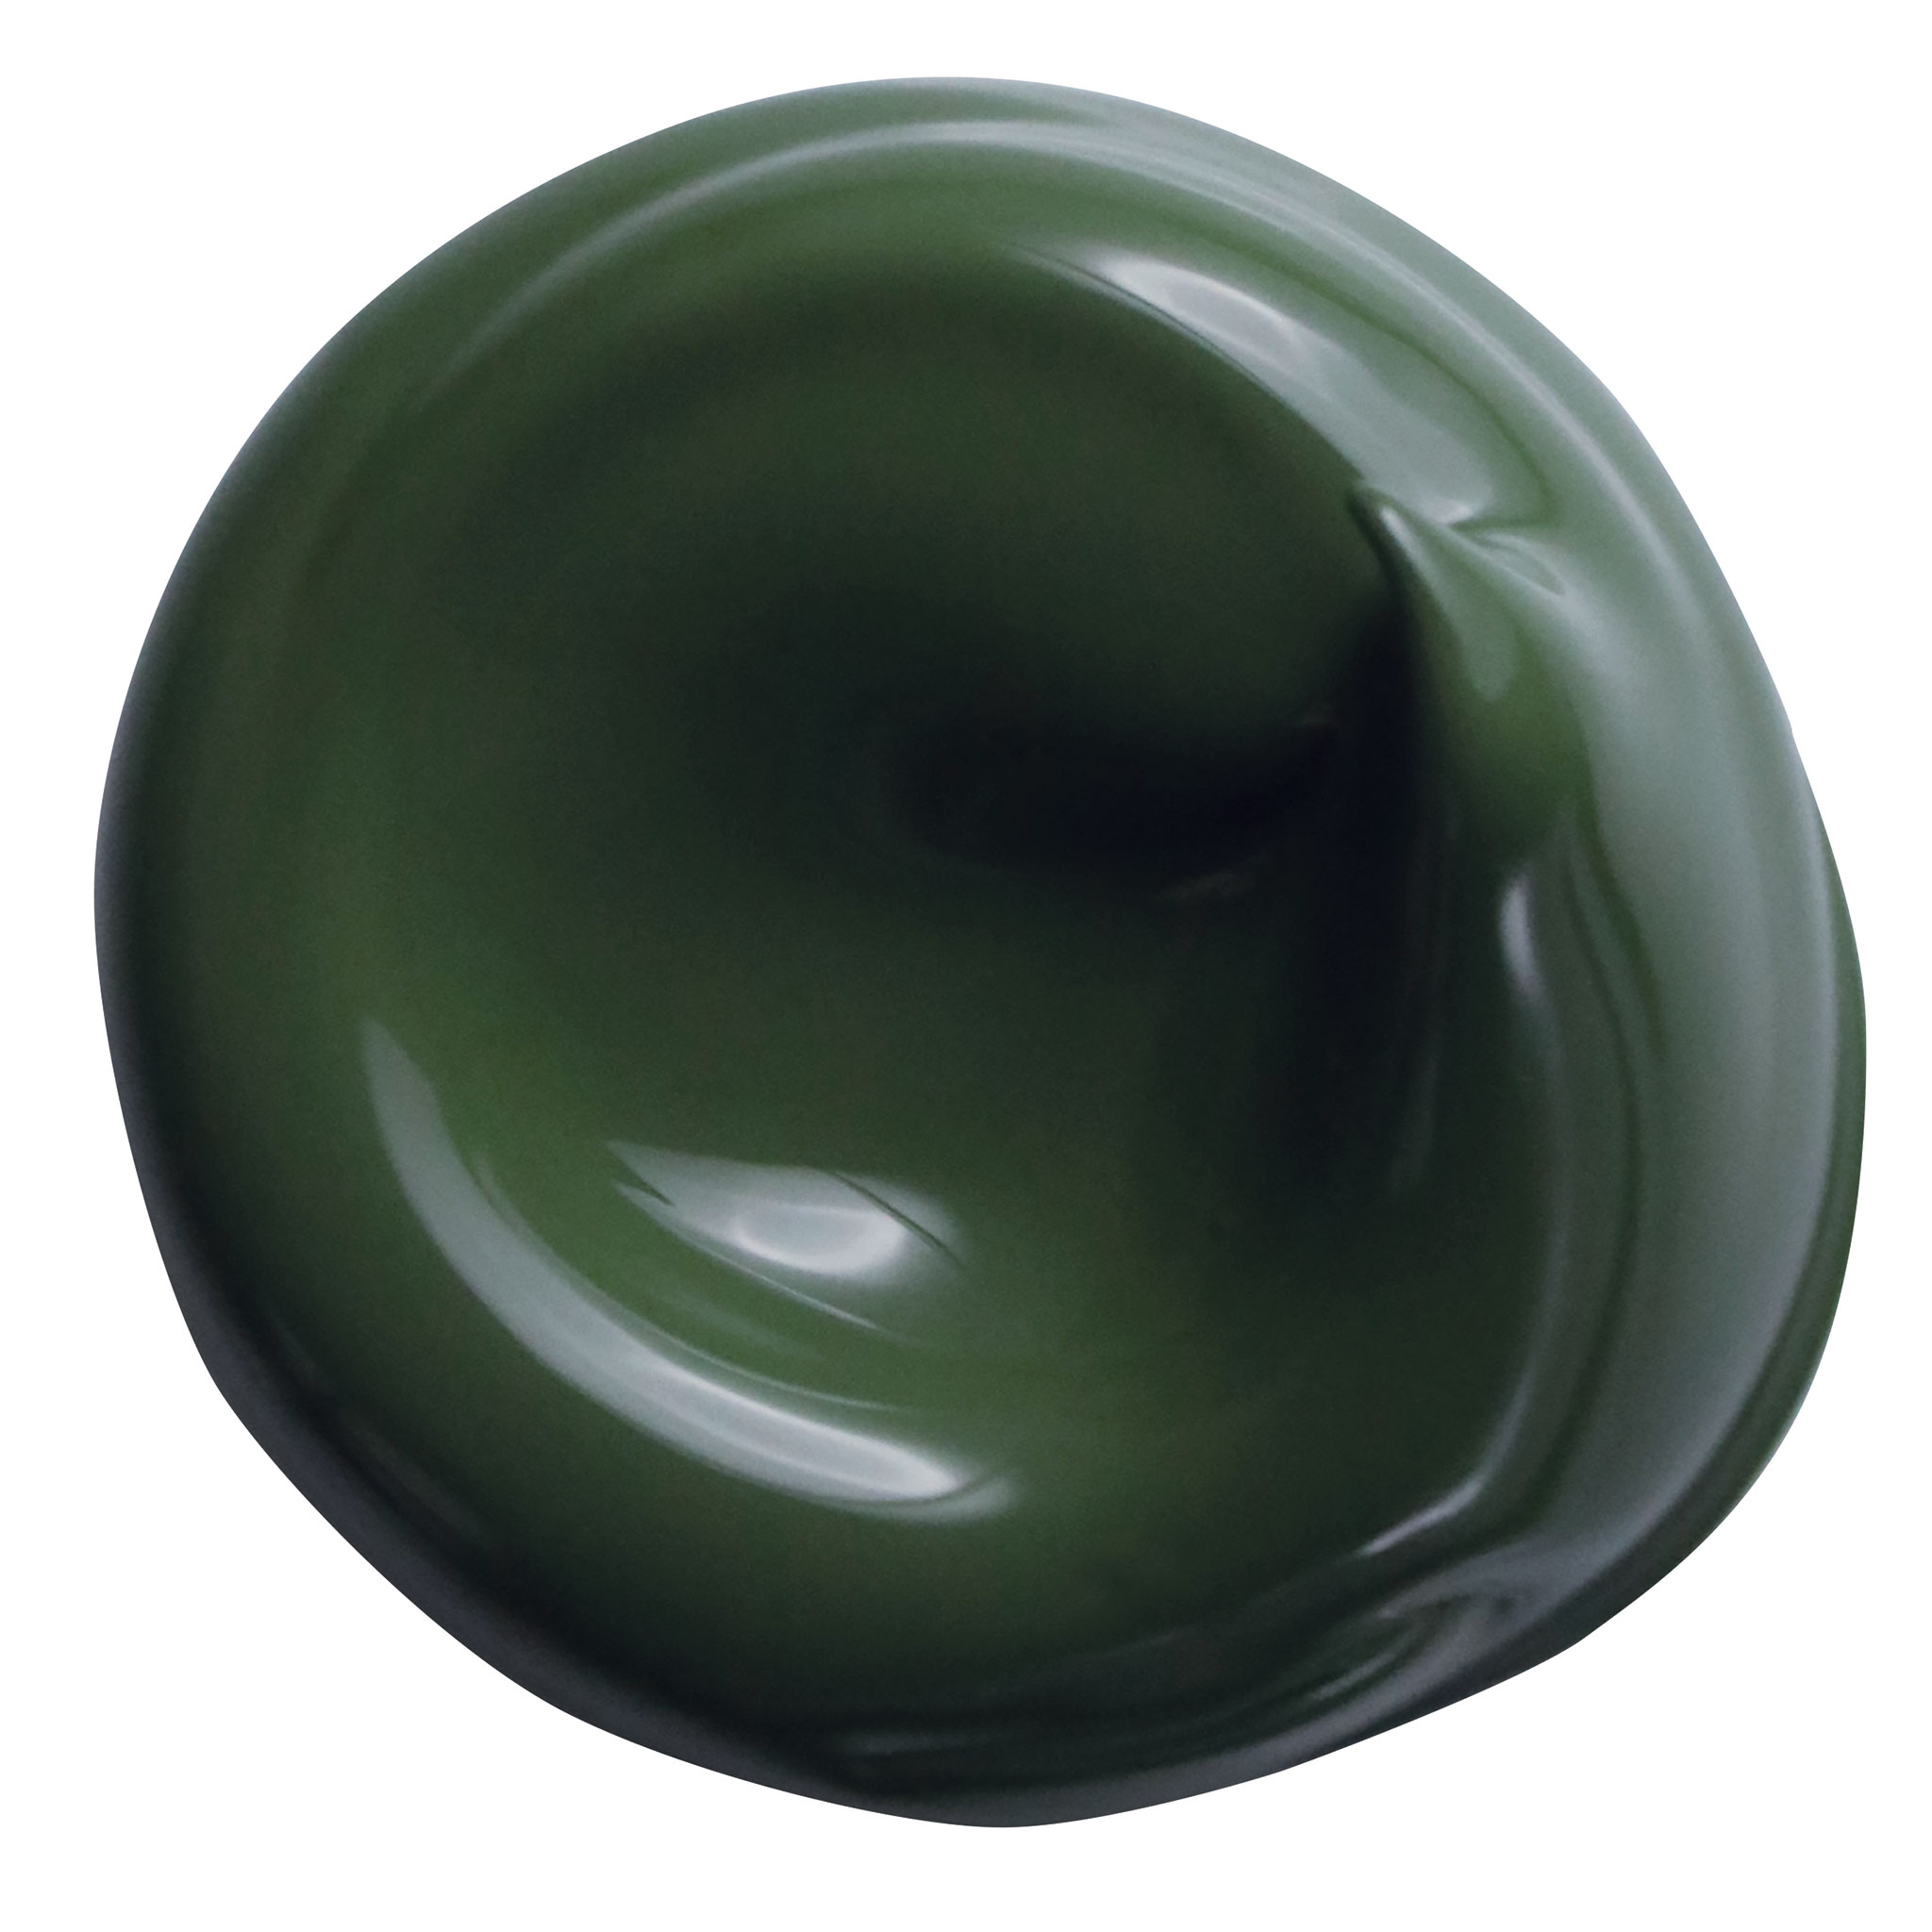 artPOP! Heavy Body Acrylic Paint - Olive Green, 120 ml Pouch 